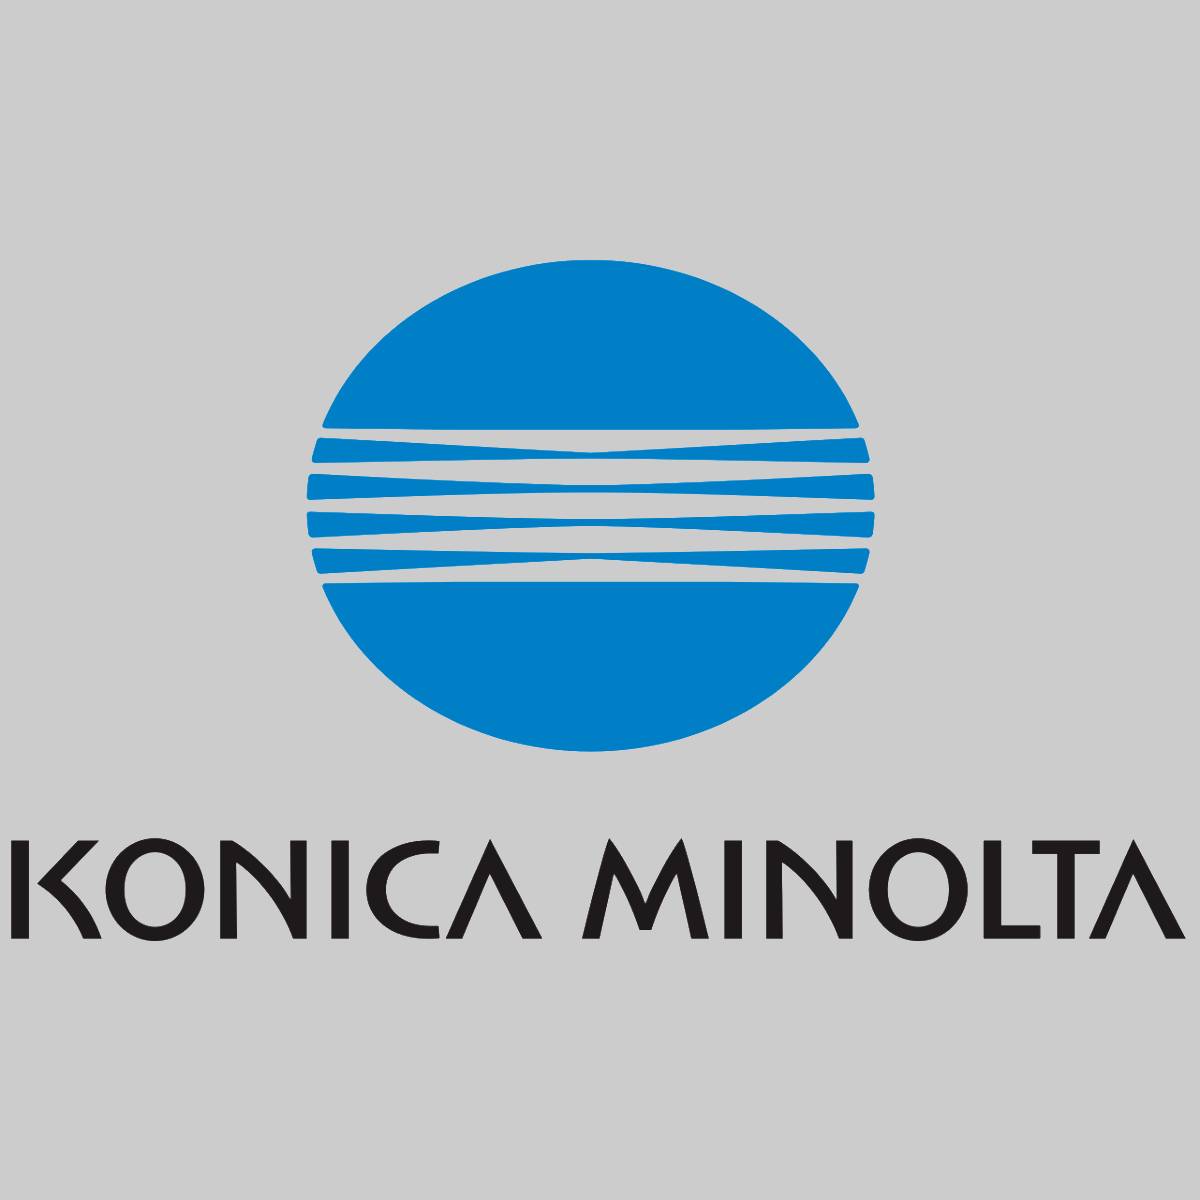 "Original Konica Minolta IU311C Imaging Unit Cyan 4062-523 für Bizhub C 352P C 3